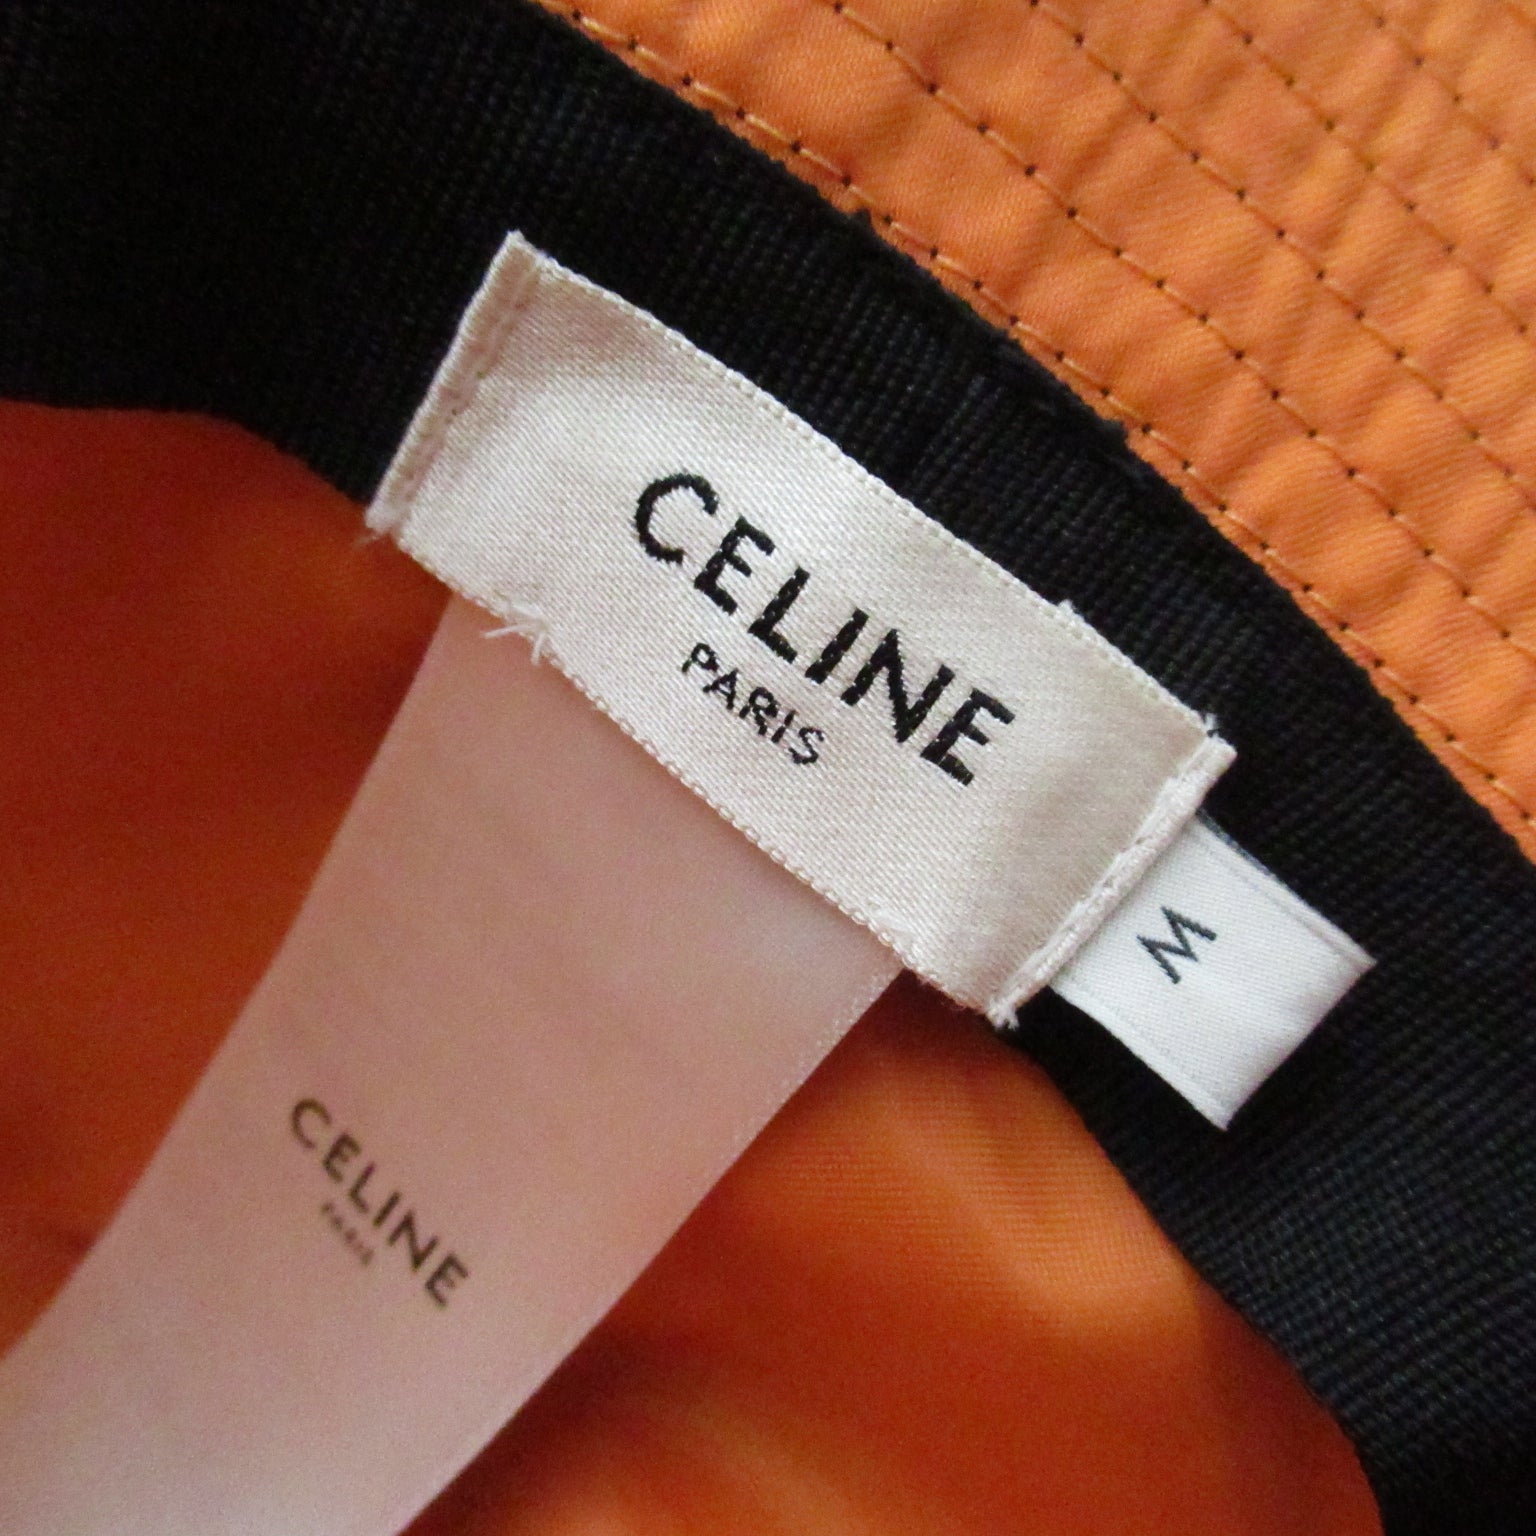 Celine Celine Bucket Hat Nylon Hats   Black 2AUB8930C